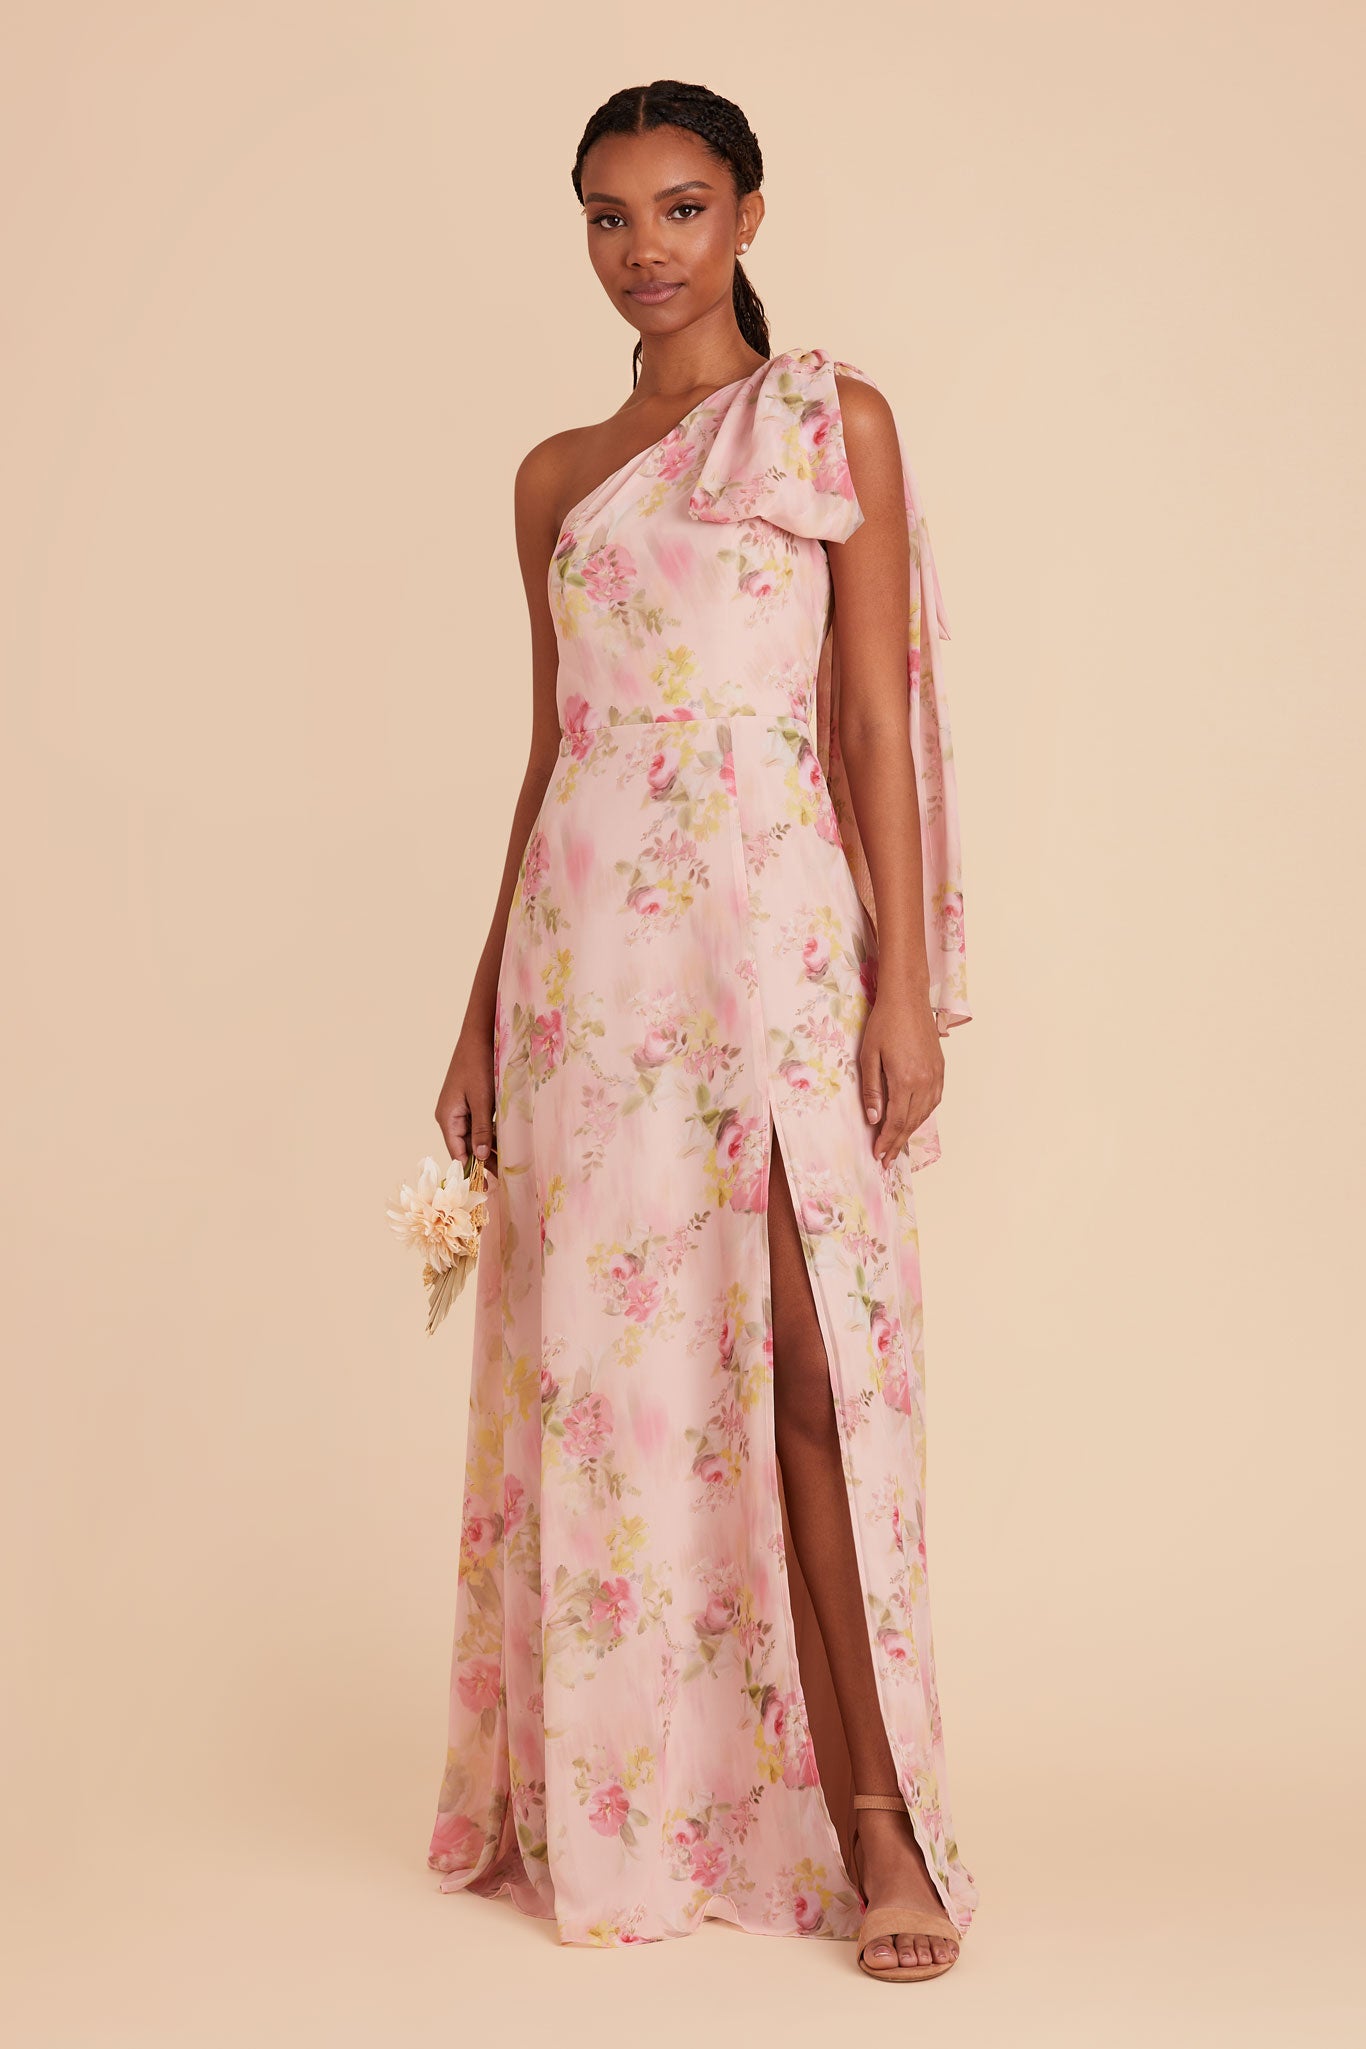 Vintage Pink Floral Melissa Chiffon Dress by Birdy Grey